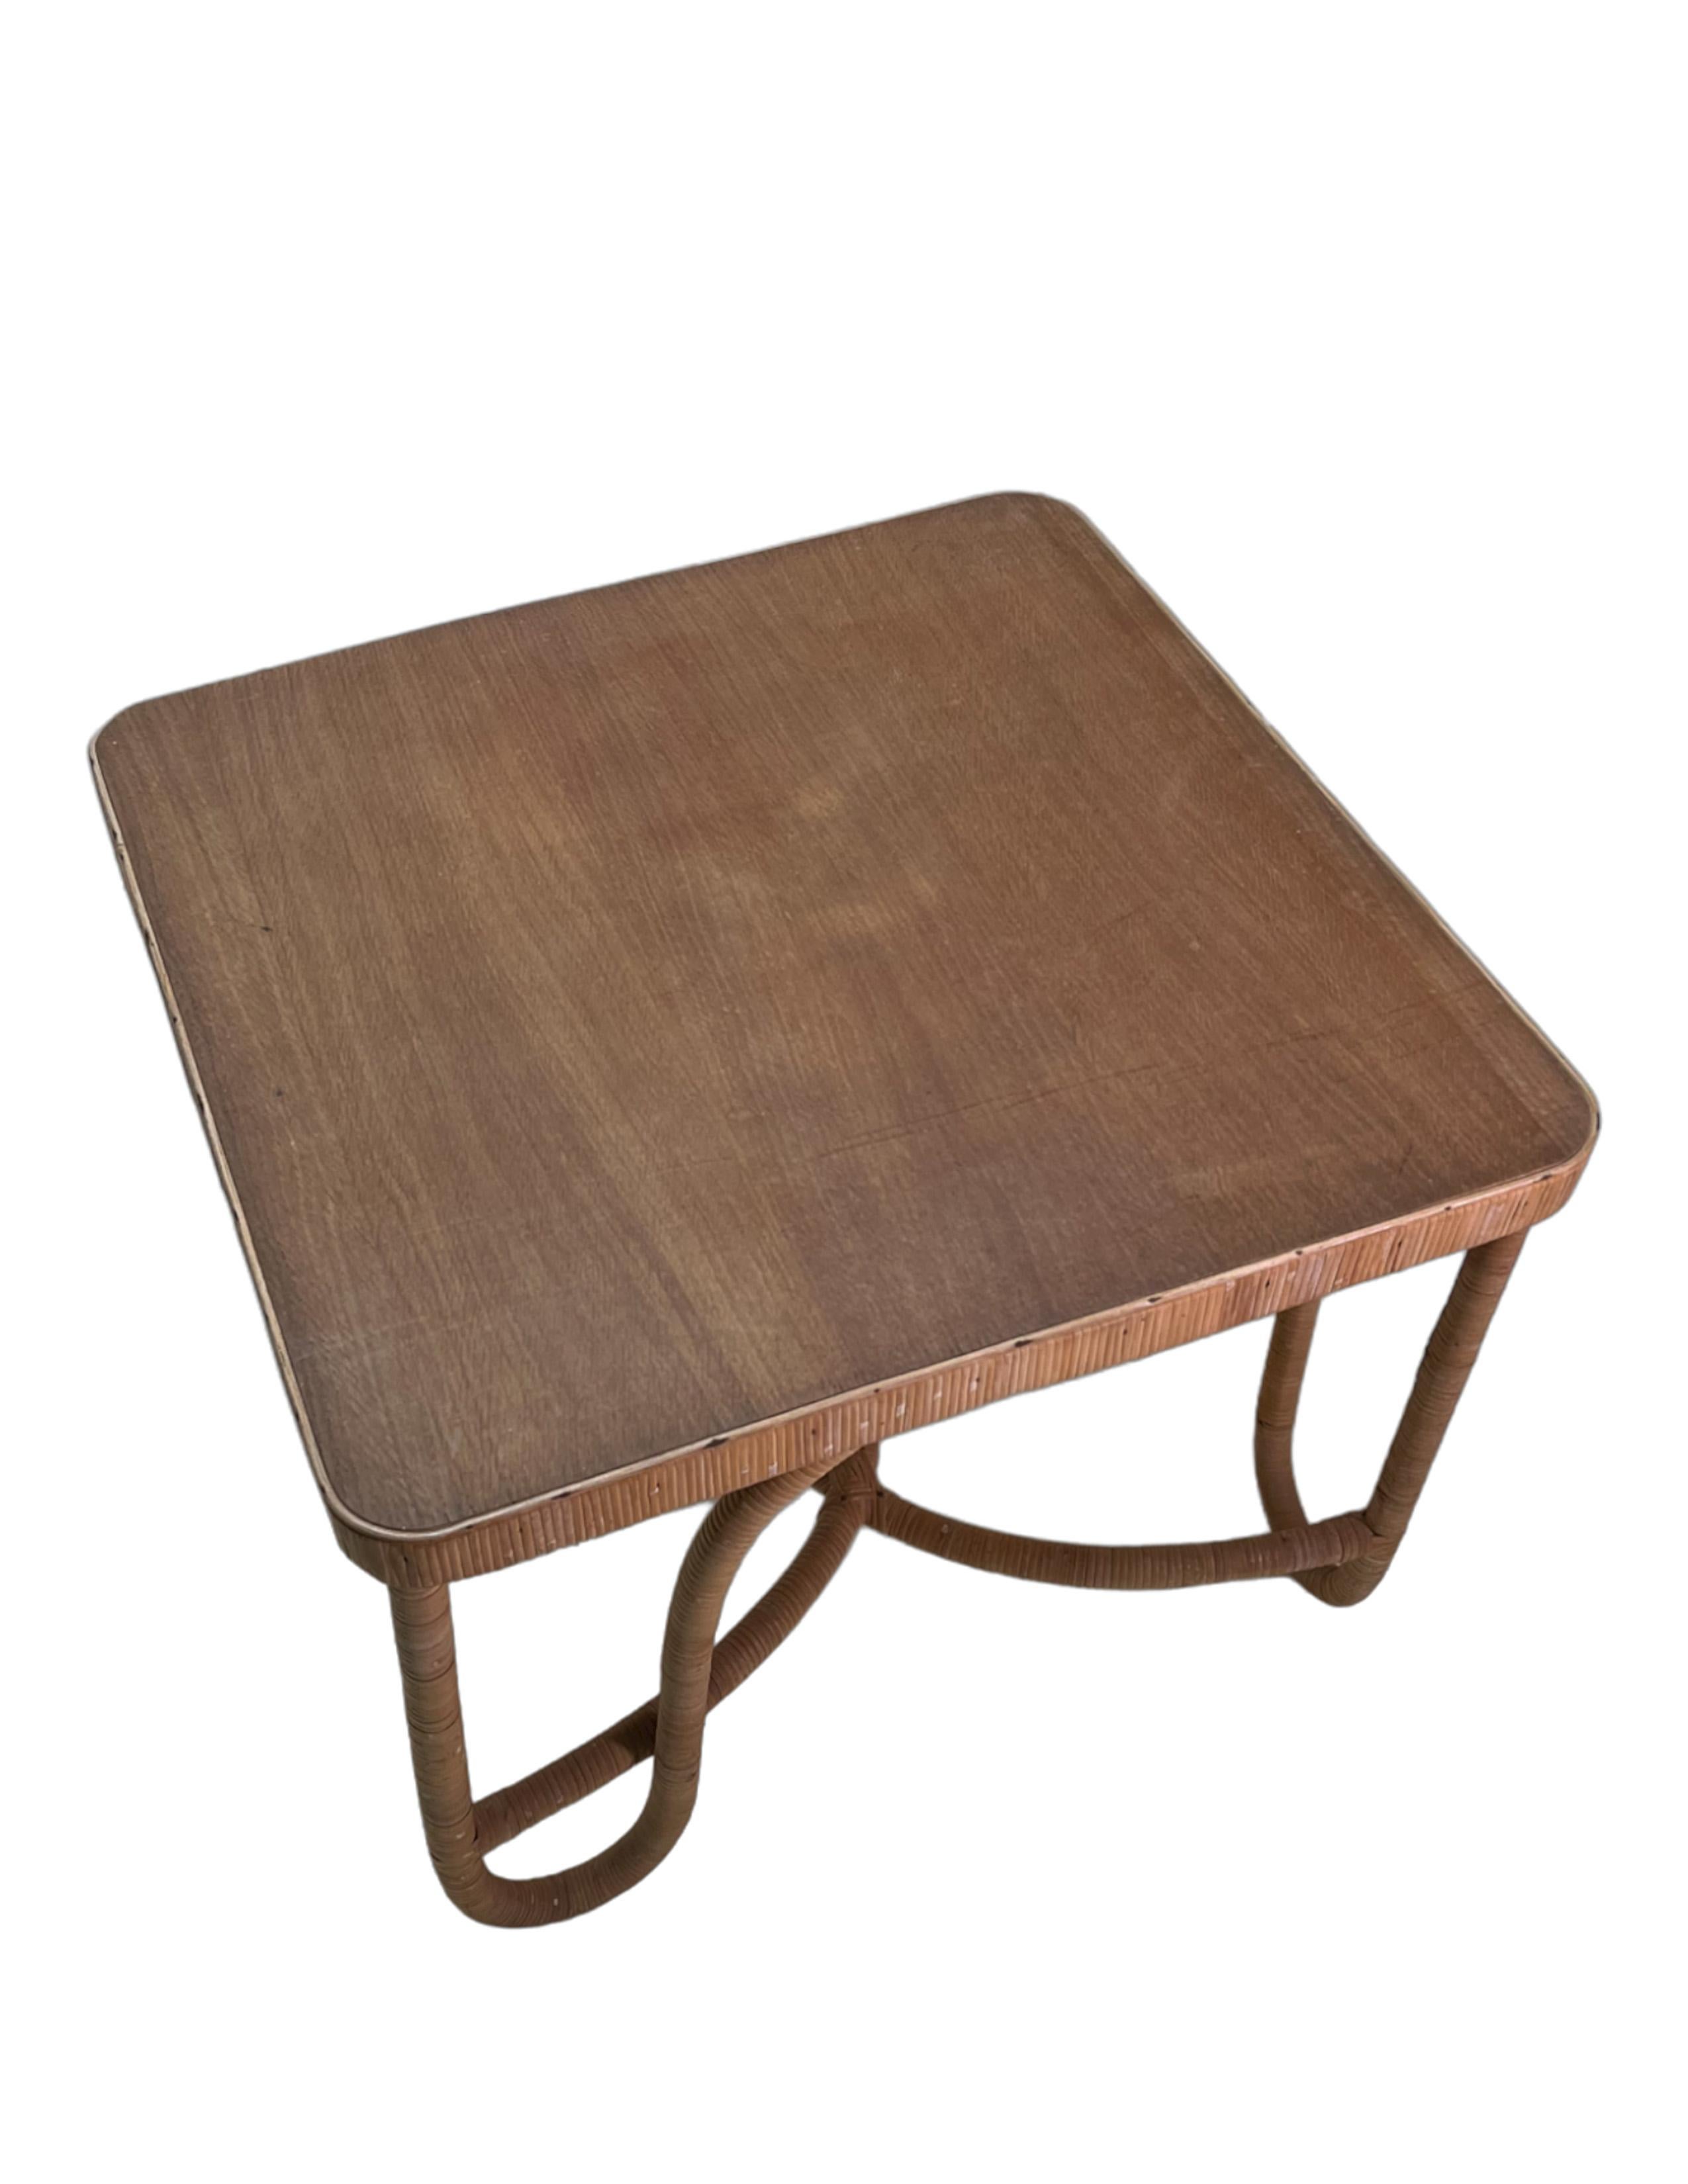 Contemporary Rattan & Wicker Table For Sale